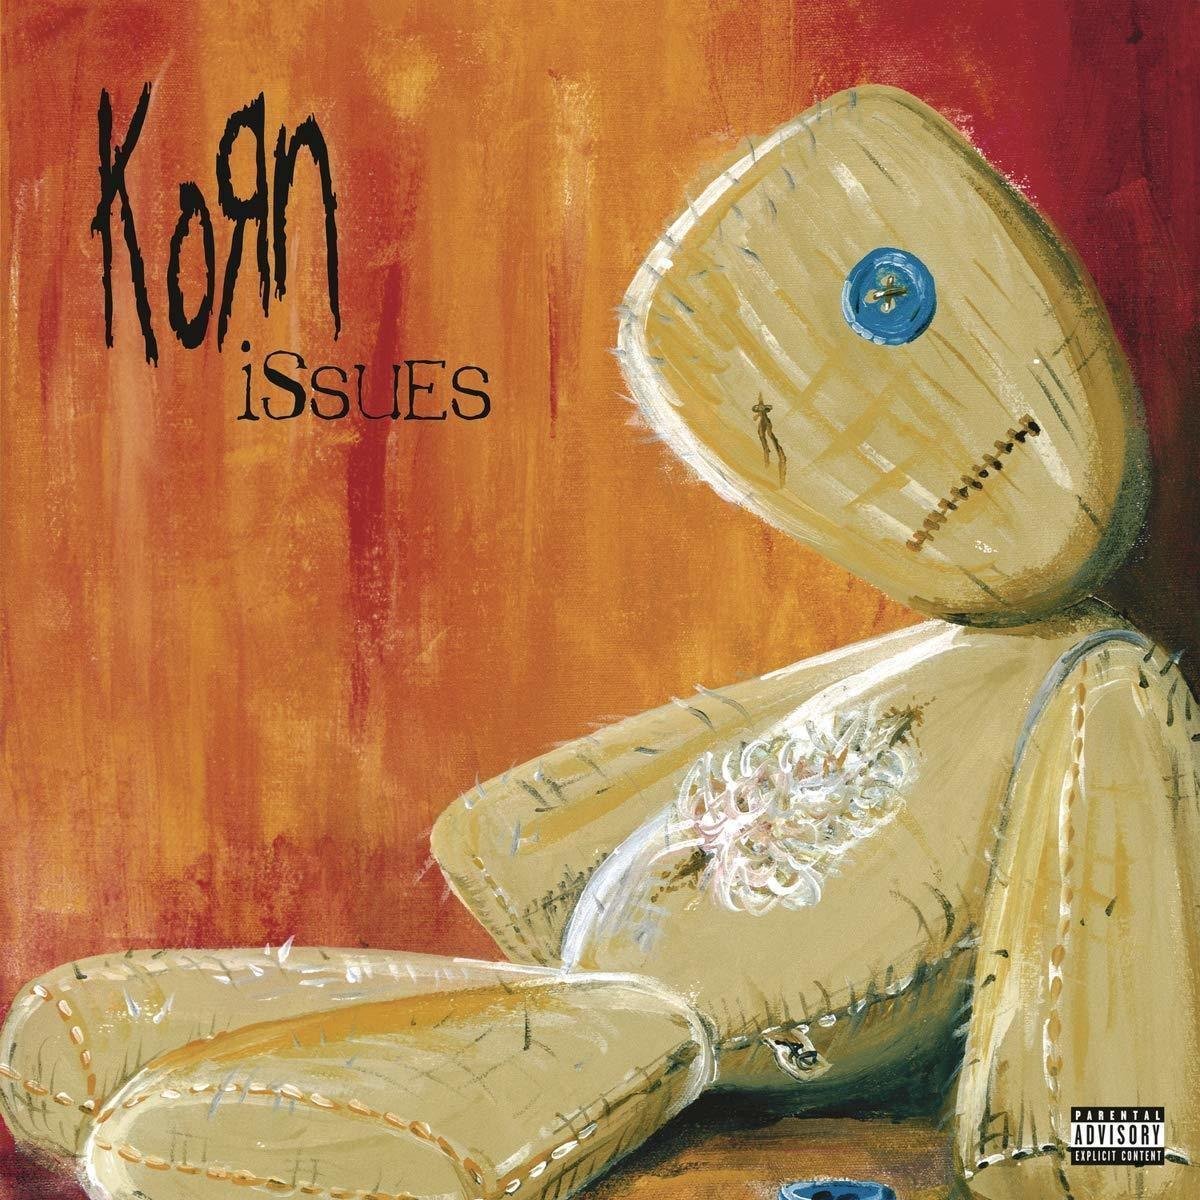 Vinyl Record Korn Issues (2 LP)